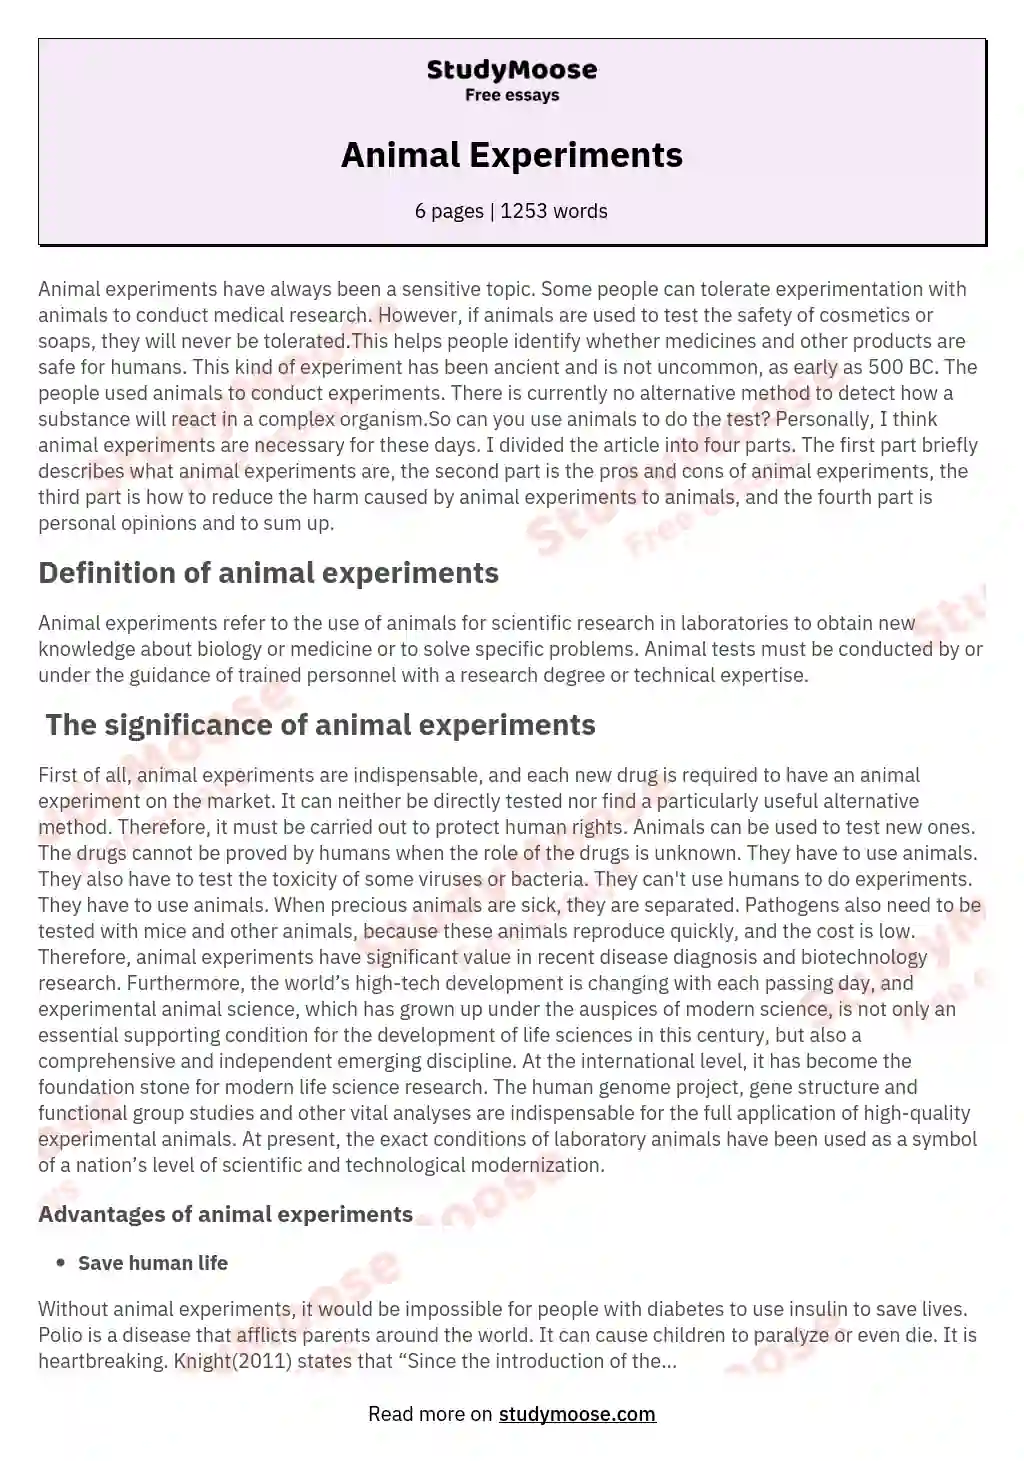 animal experiments advantages and disadvantages essay